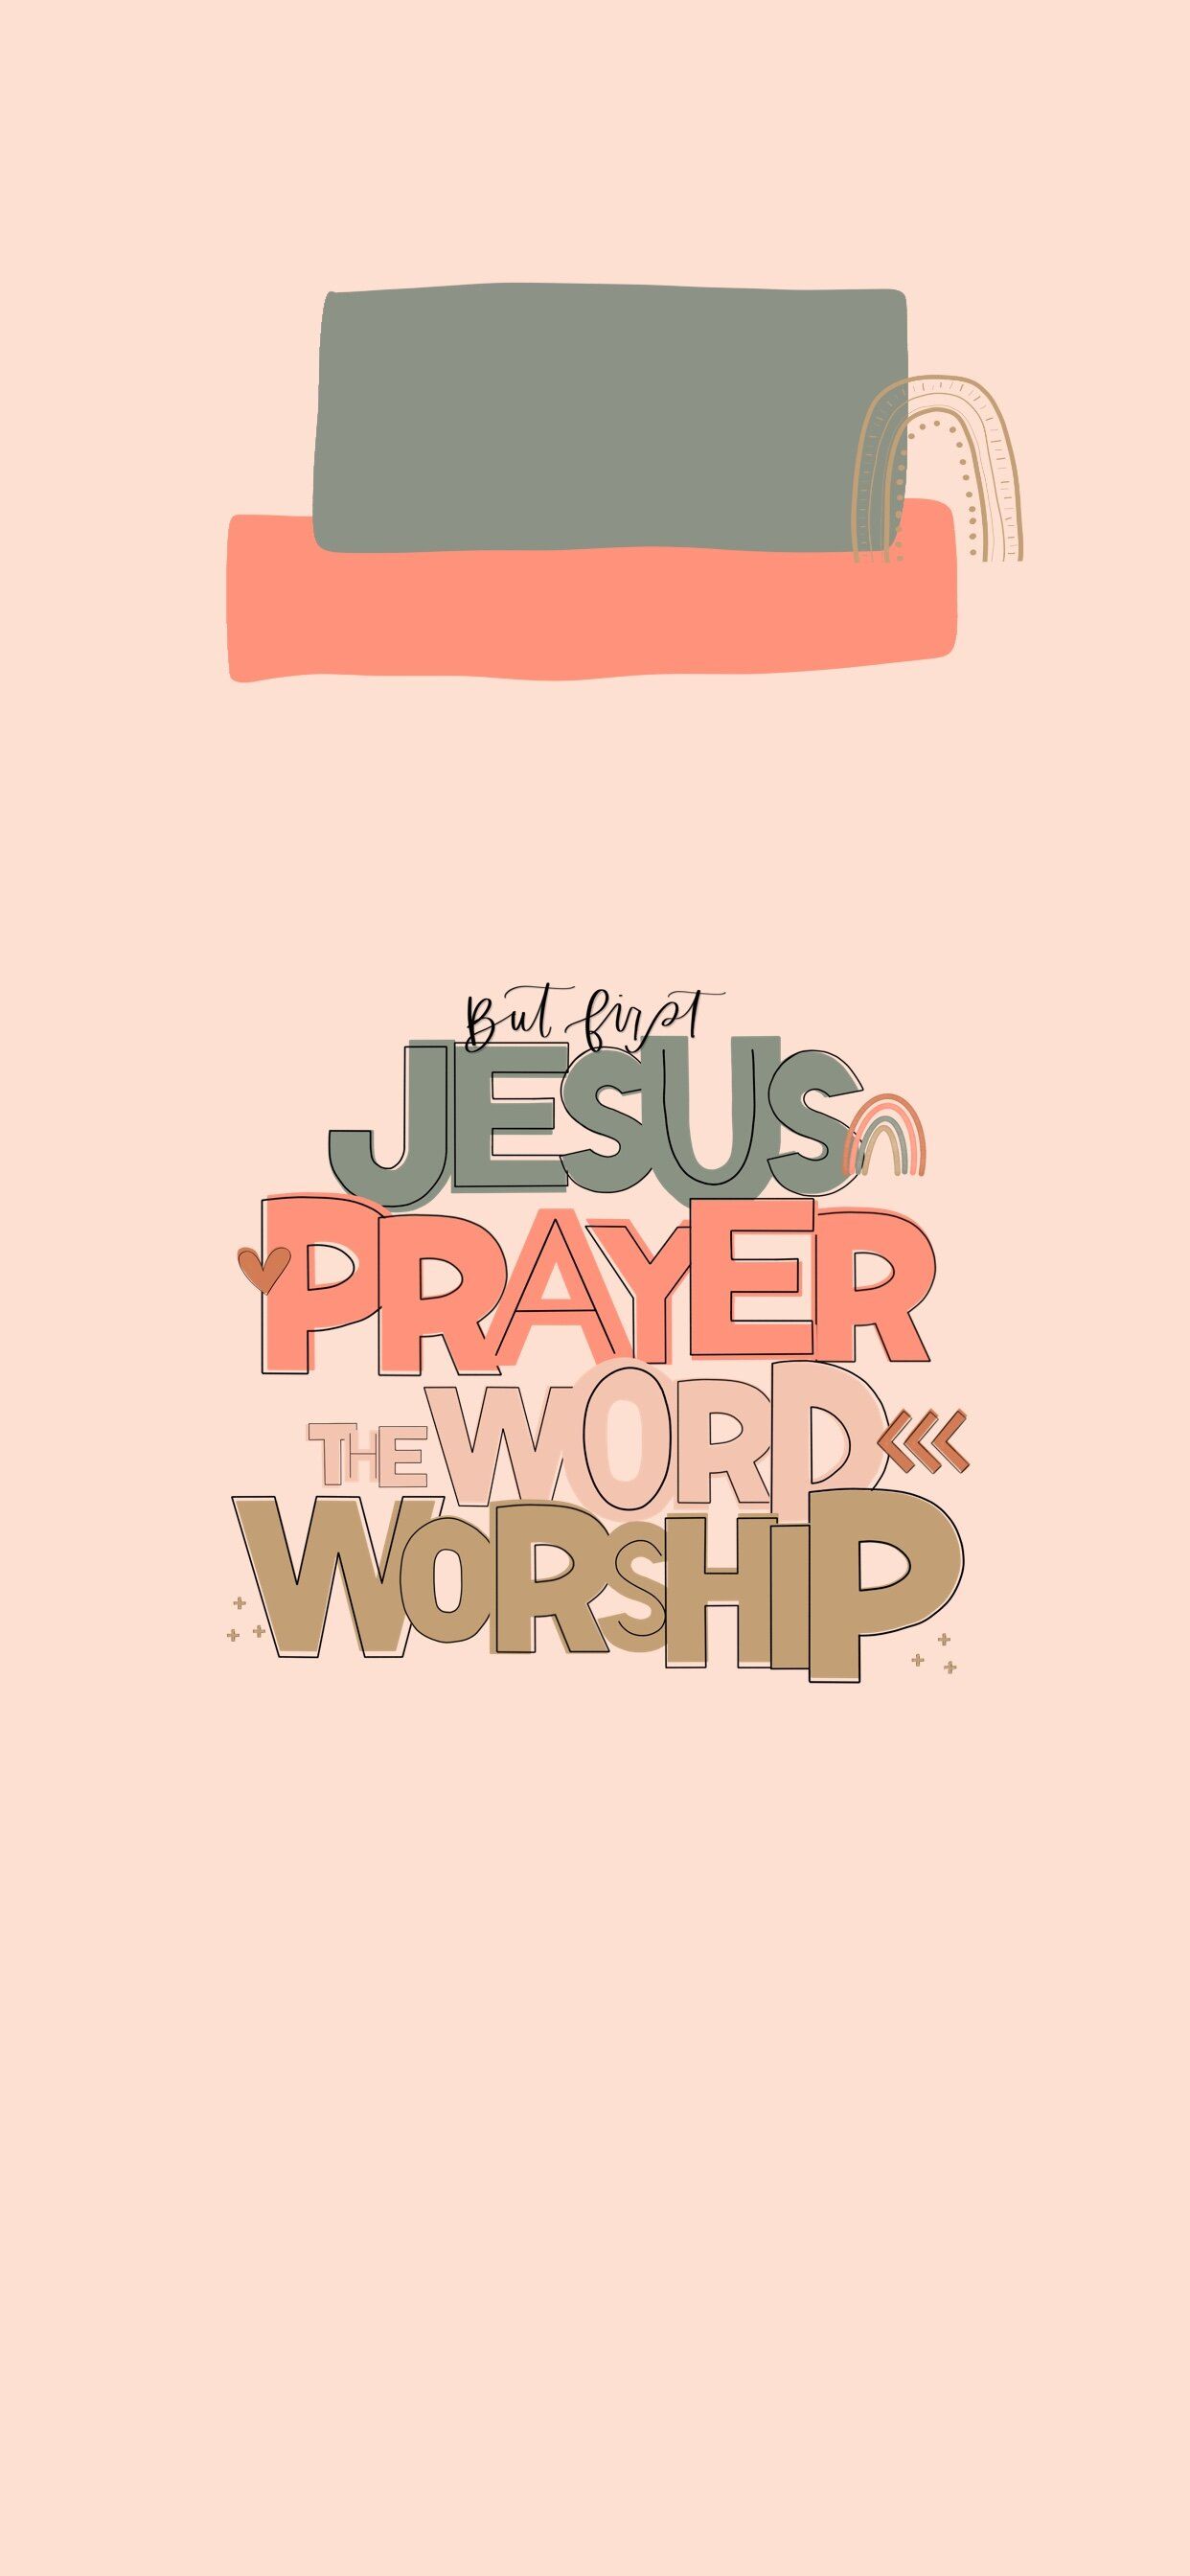 But in 2021, Jesus, Prayer, The world, worship - Jesus